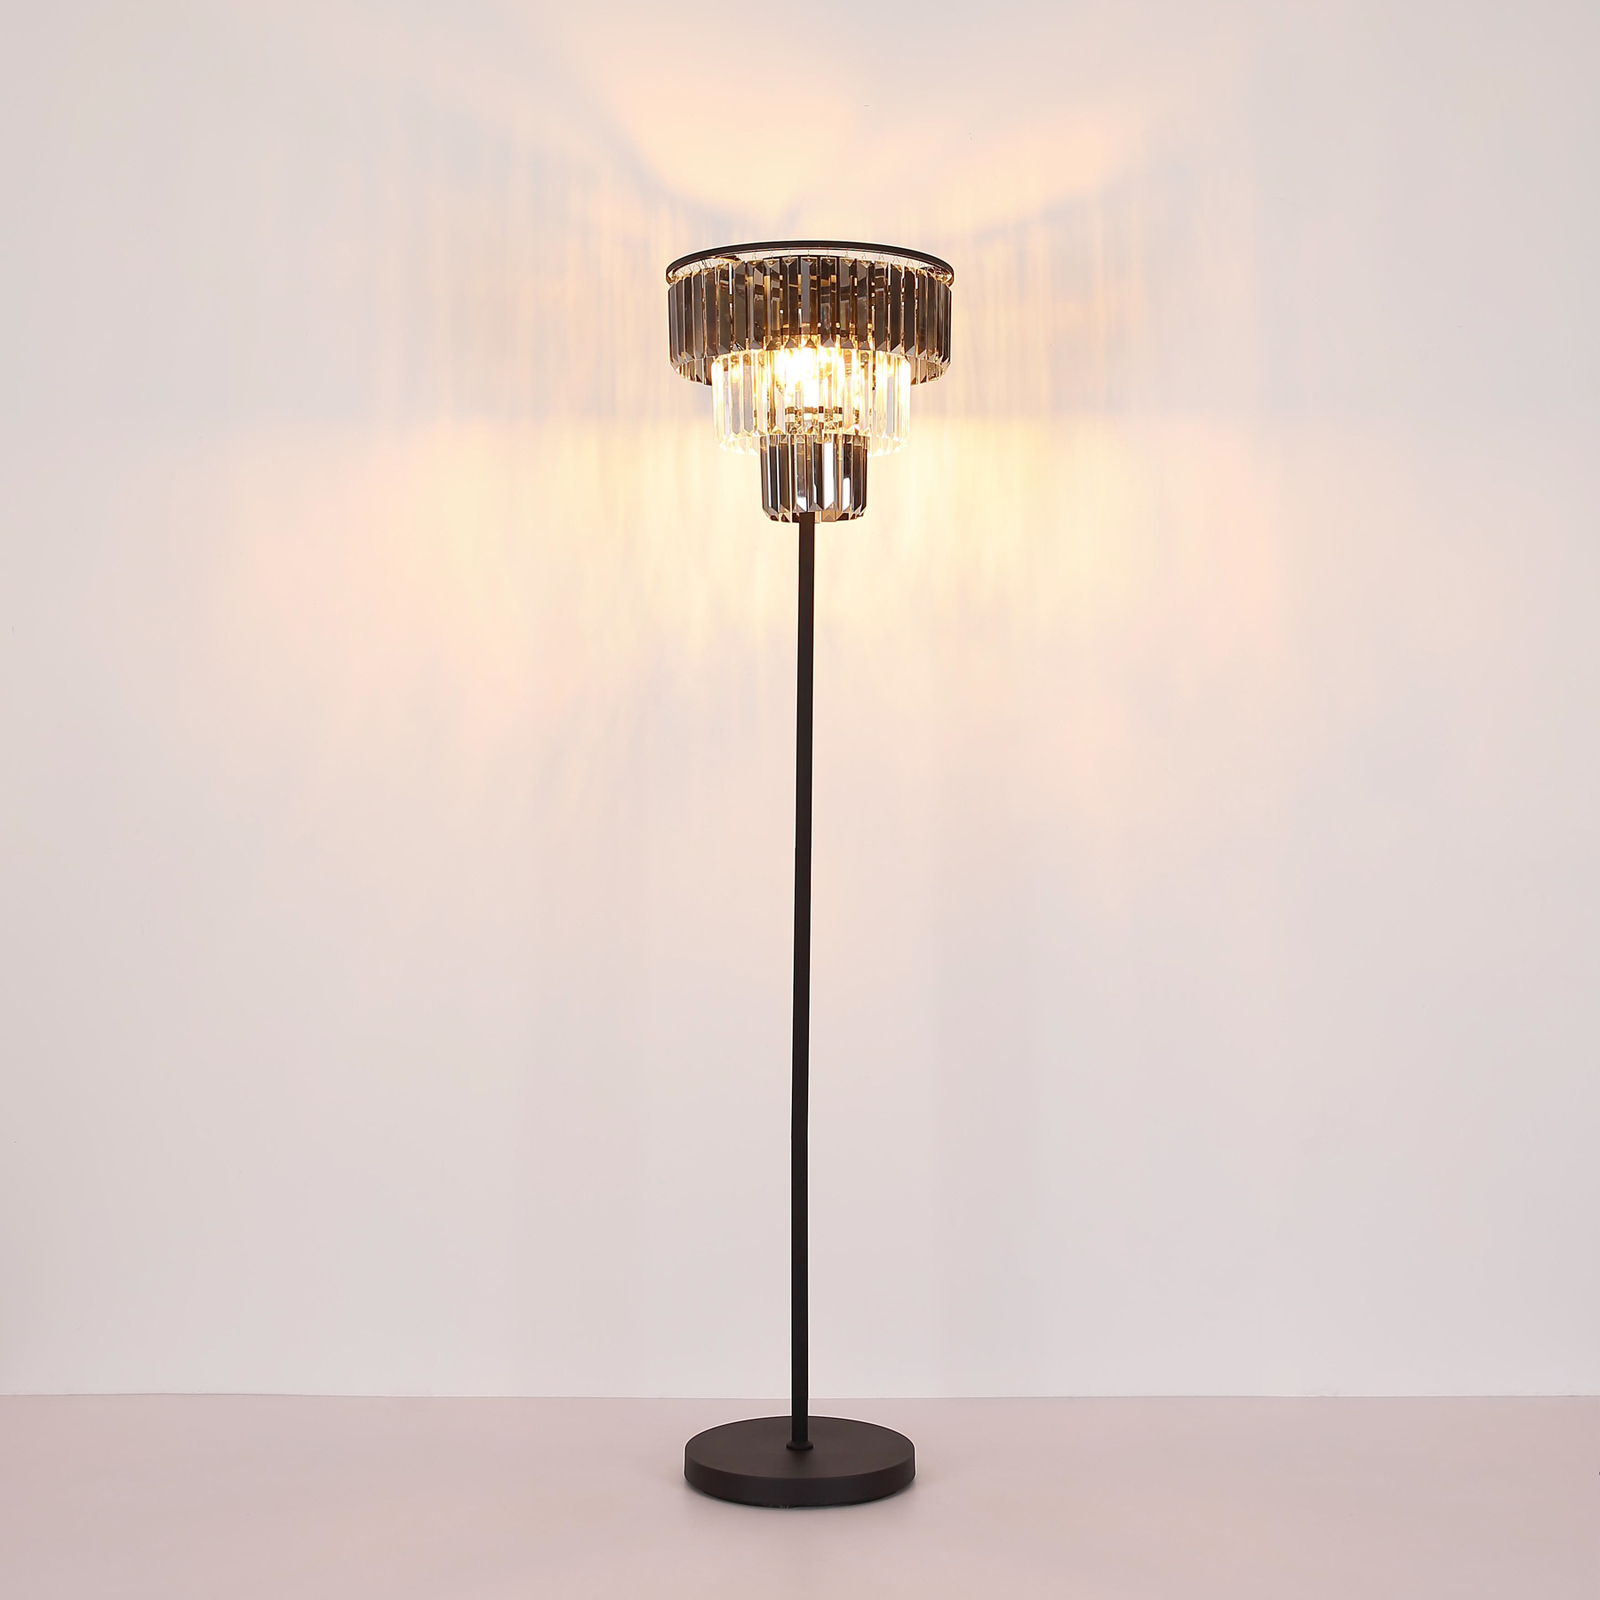 Vloerlamp Naxis, zwart/rookgrijs, hoogte 160 cm, kristal